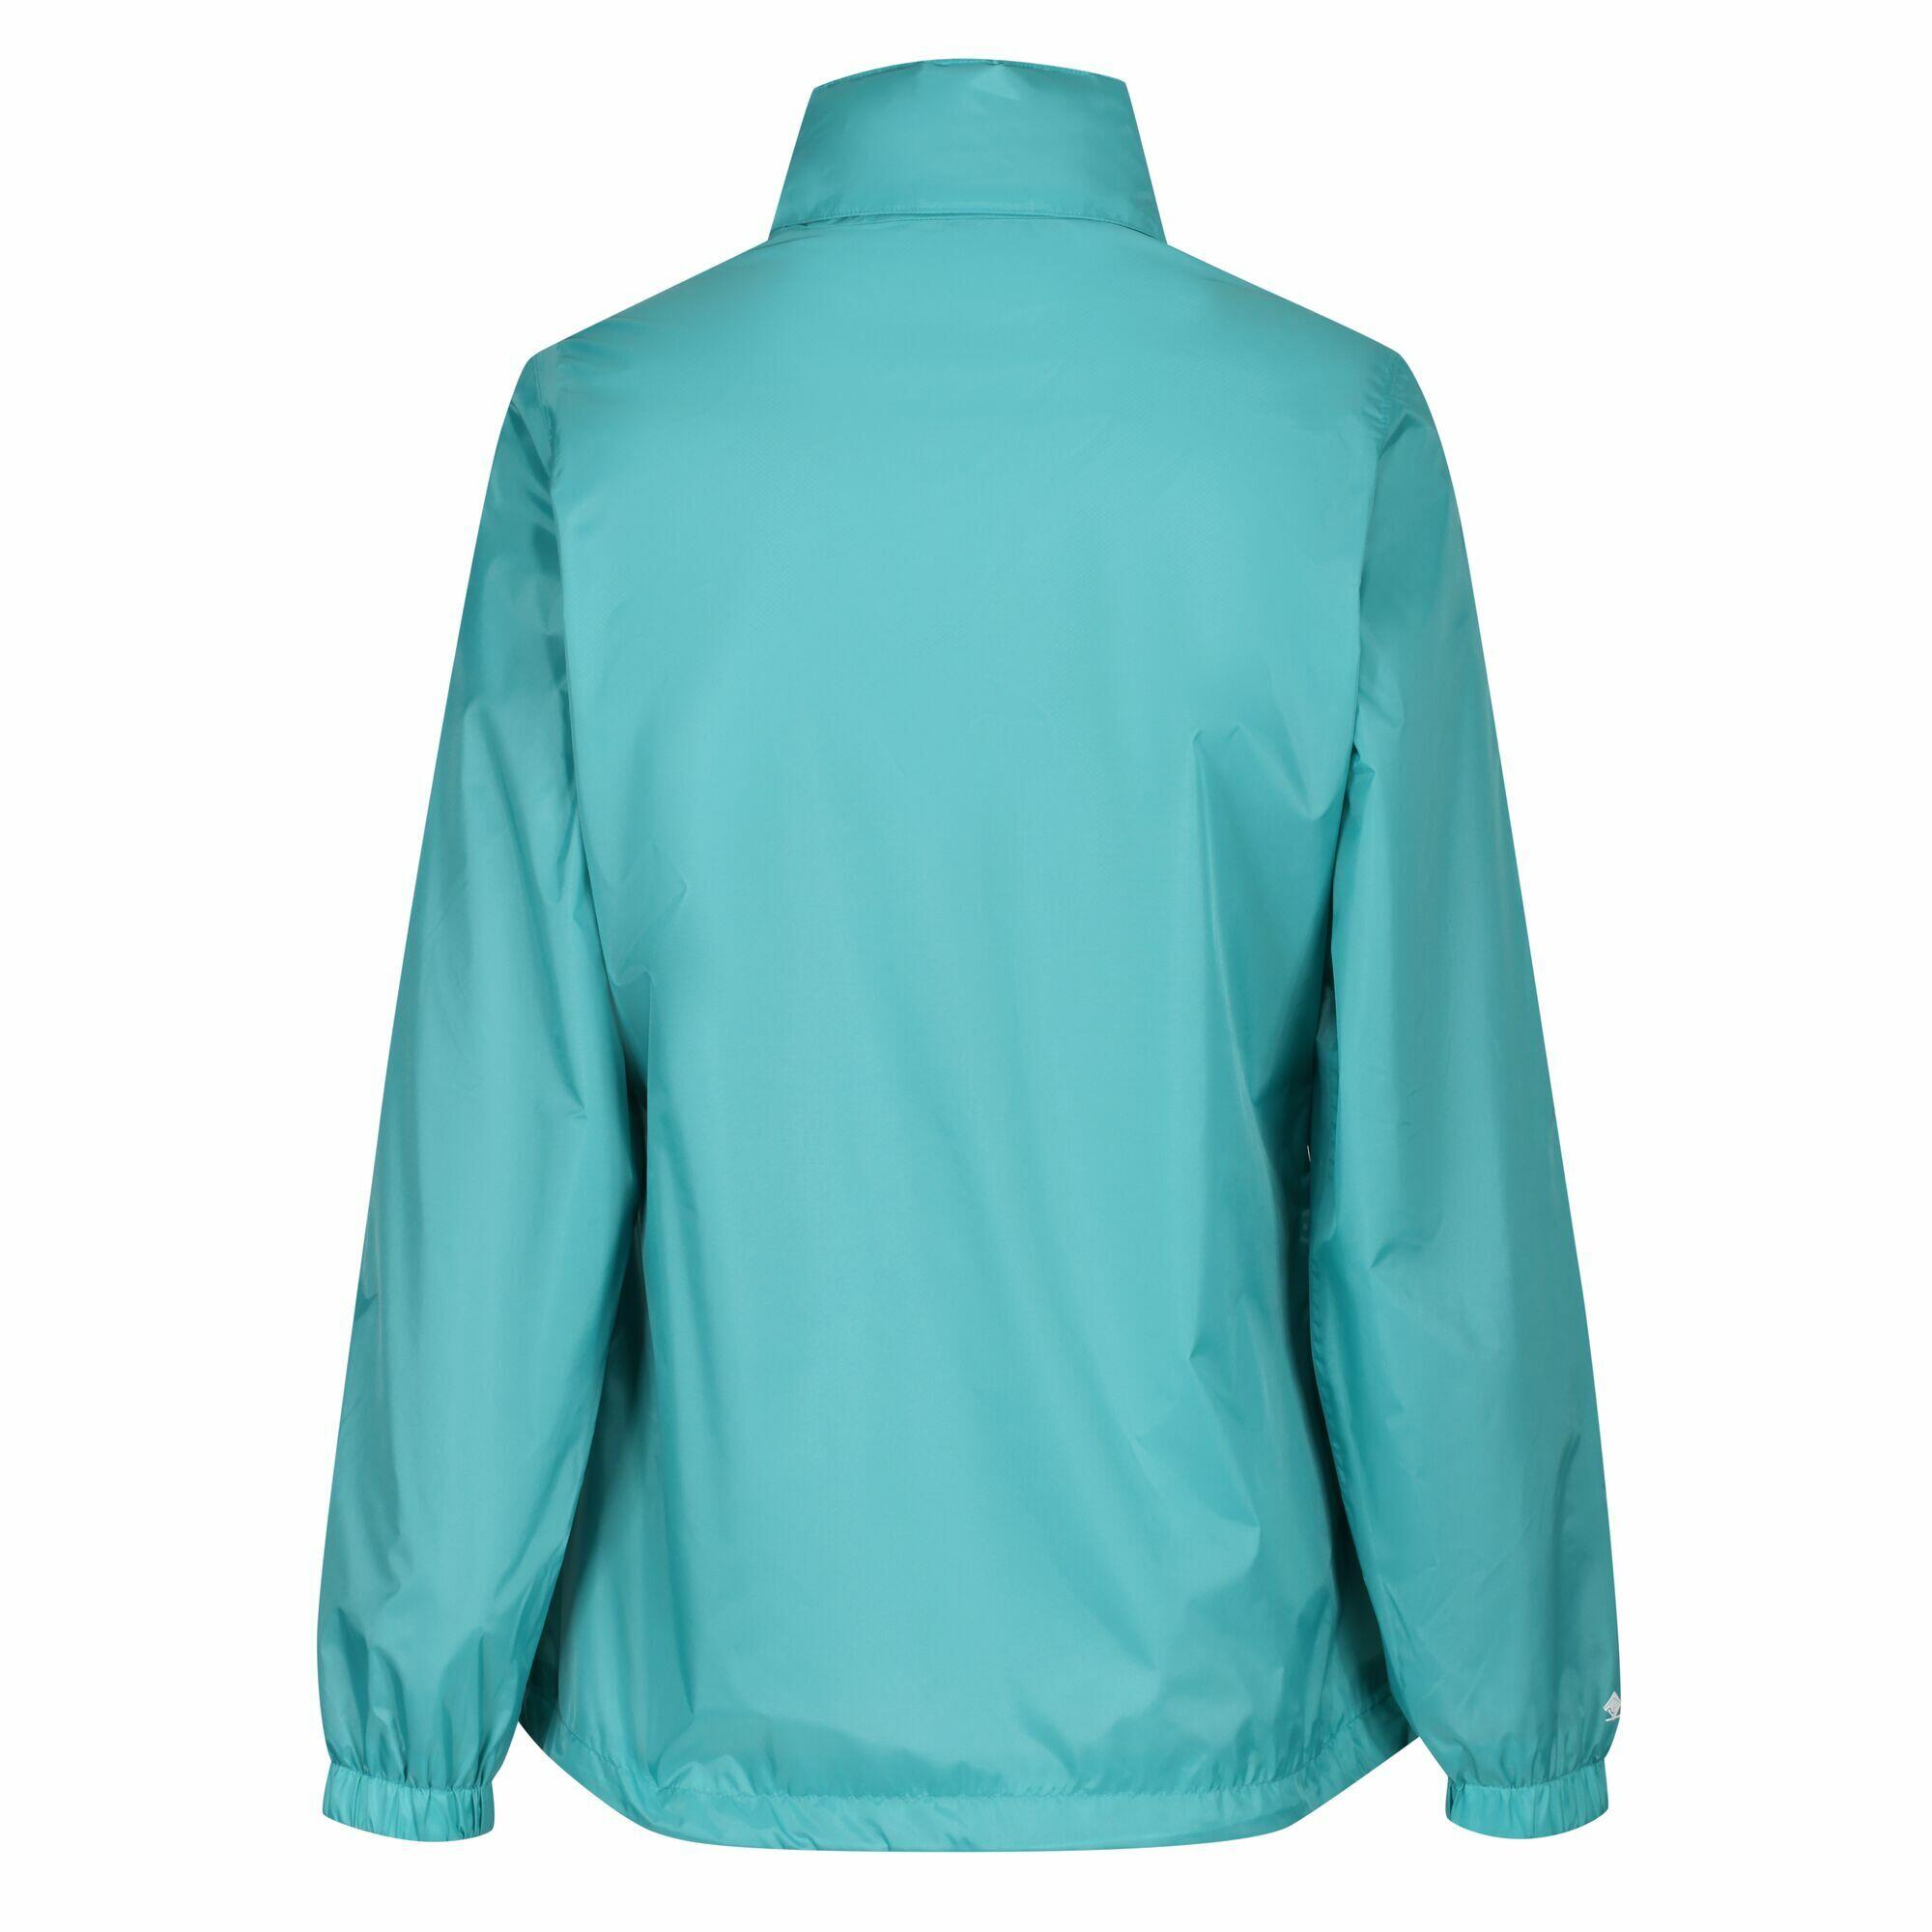 Corinne IV Women's Fitness Waterproof Rain Jacket - Turquoise 6/6